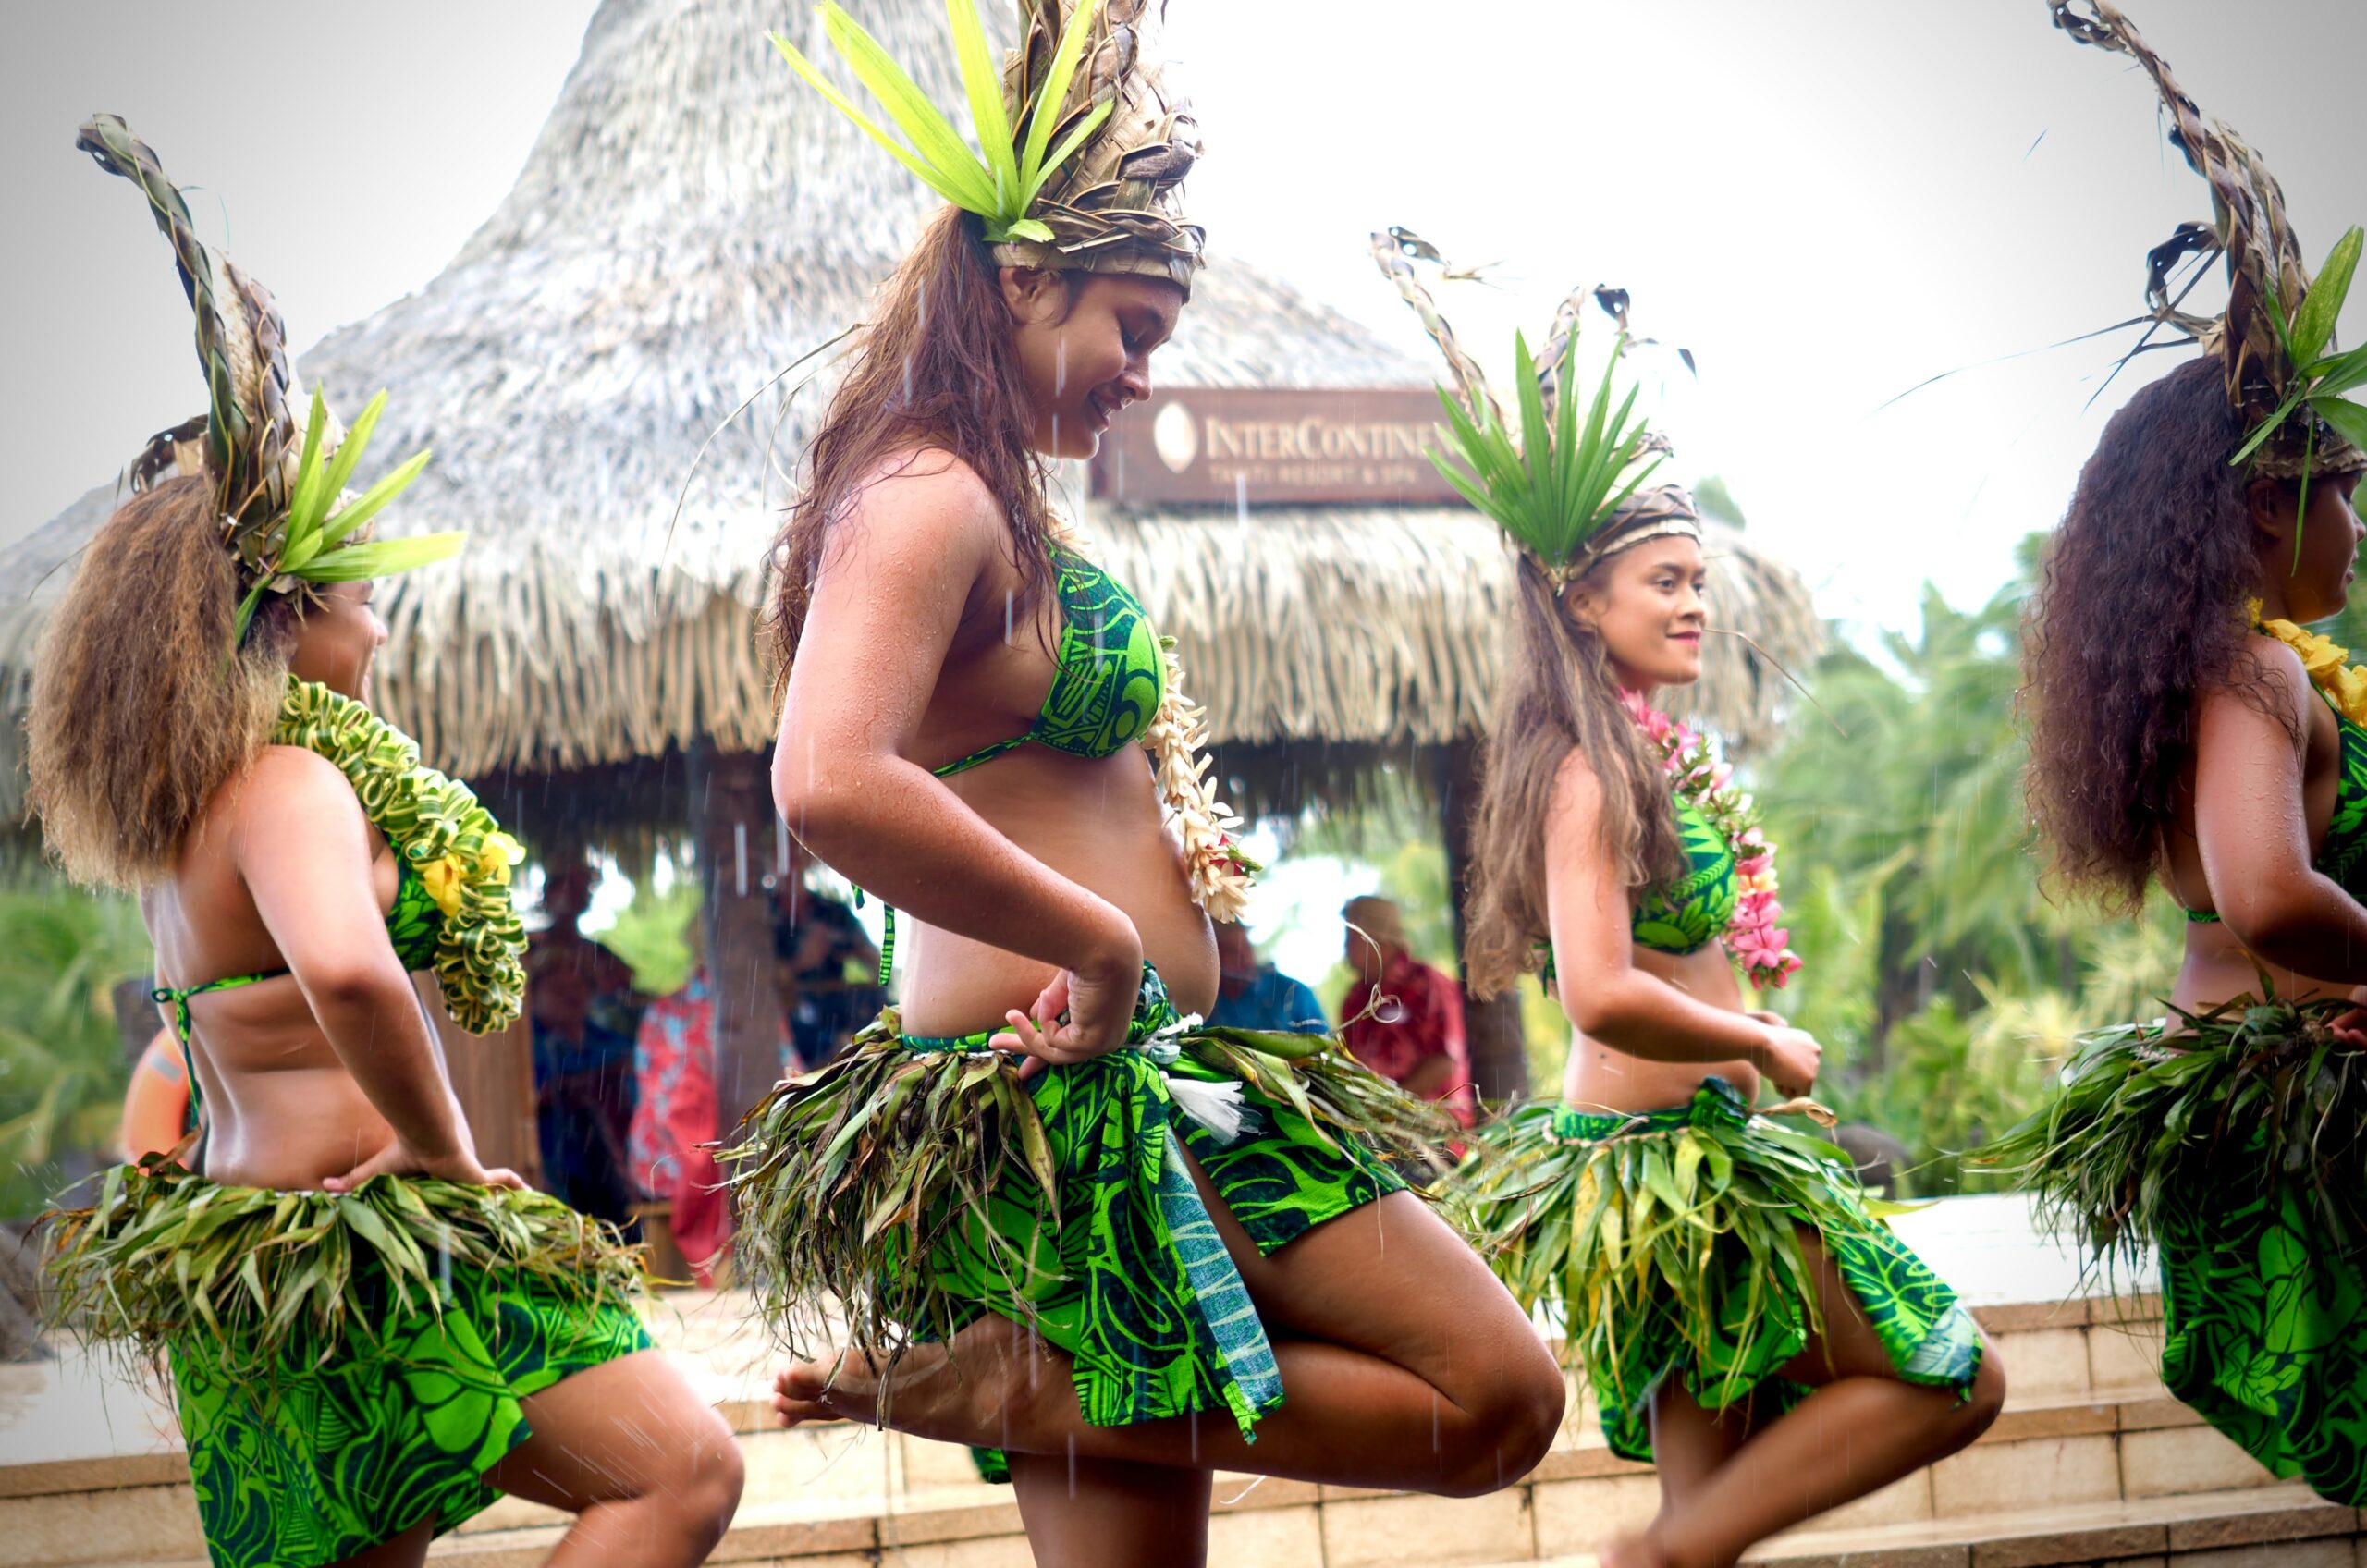 Mulheres dançando no Tahiti, Polinésia Francesa - Representa seguro viagem Tahiti.